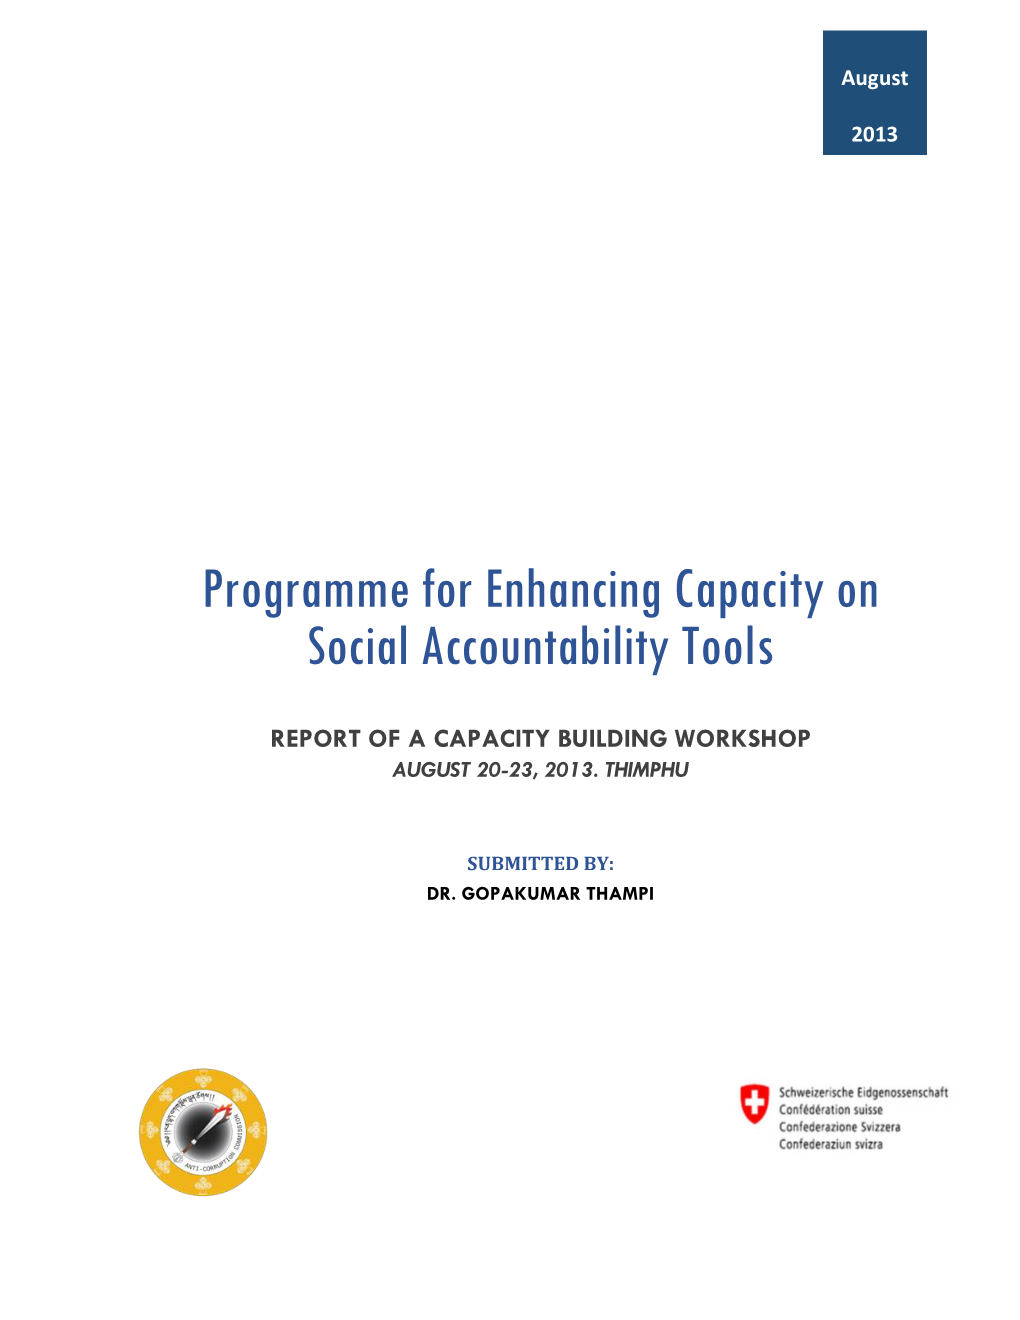 Programme for Enhancing Capacity on Social Accountability Tools